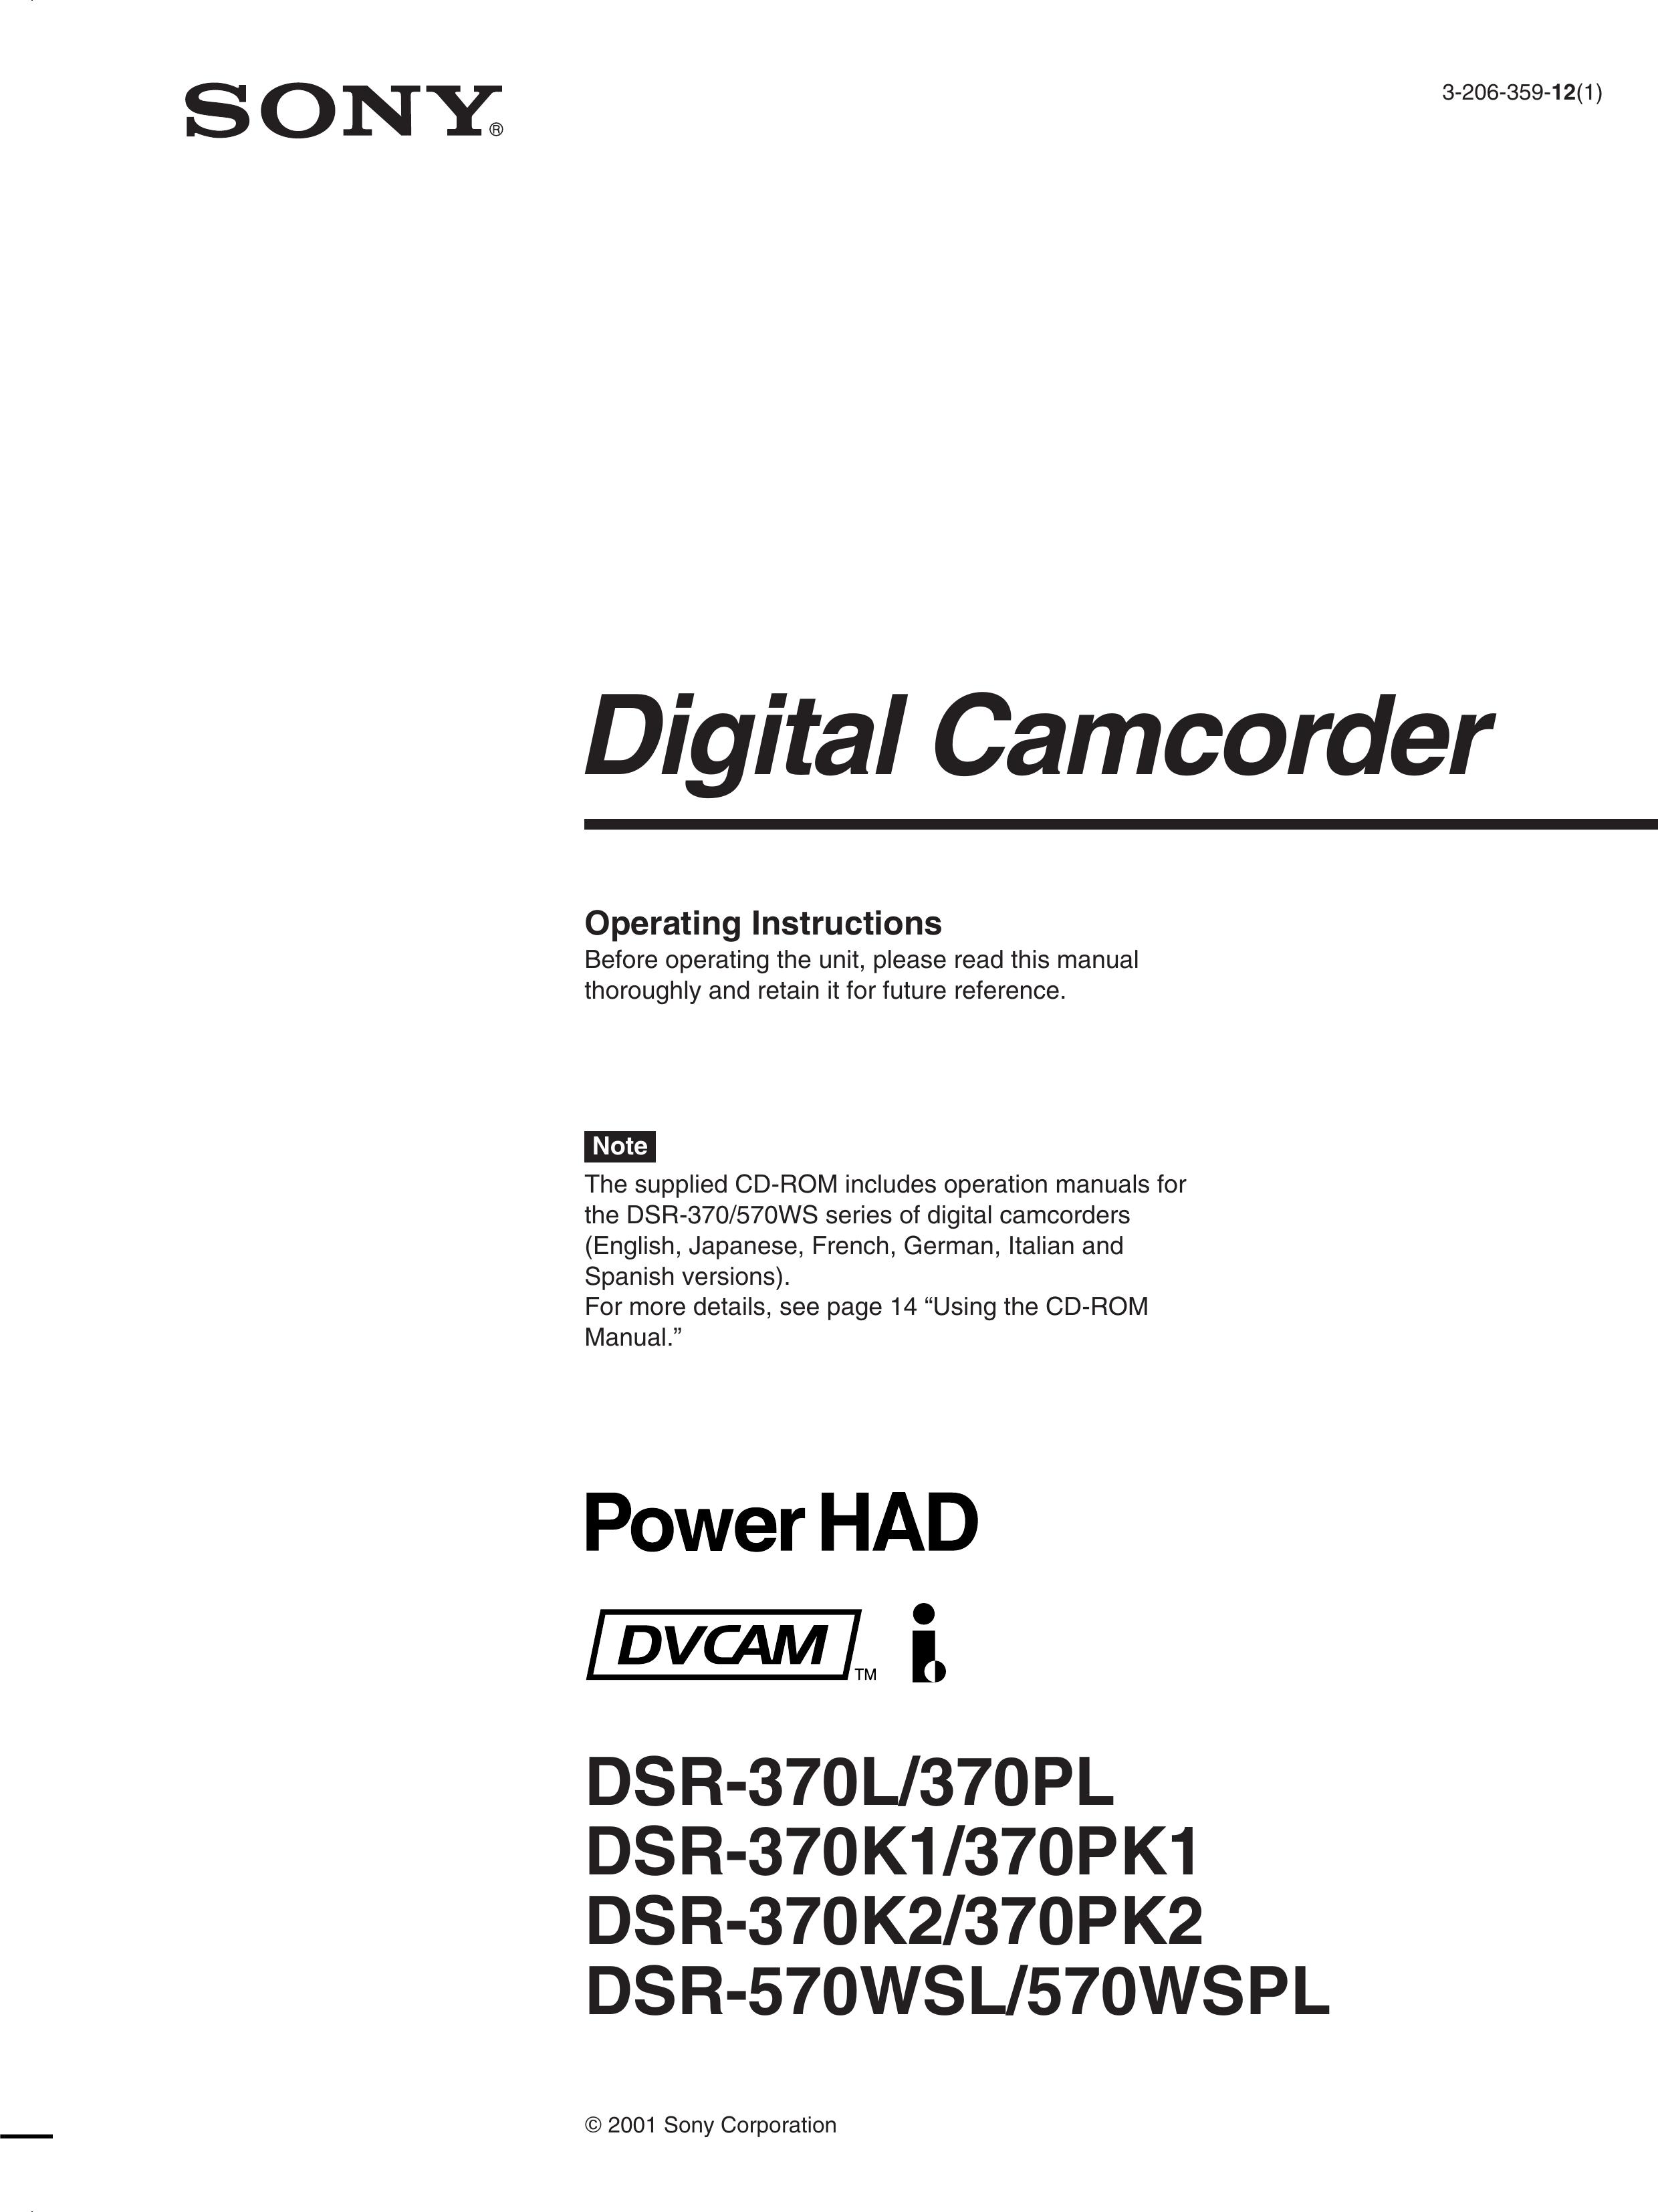 Sony 370PK1 Camera Accessories User Manual